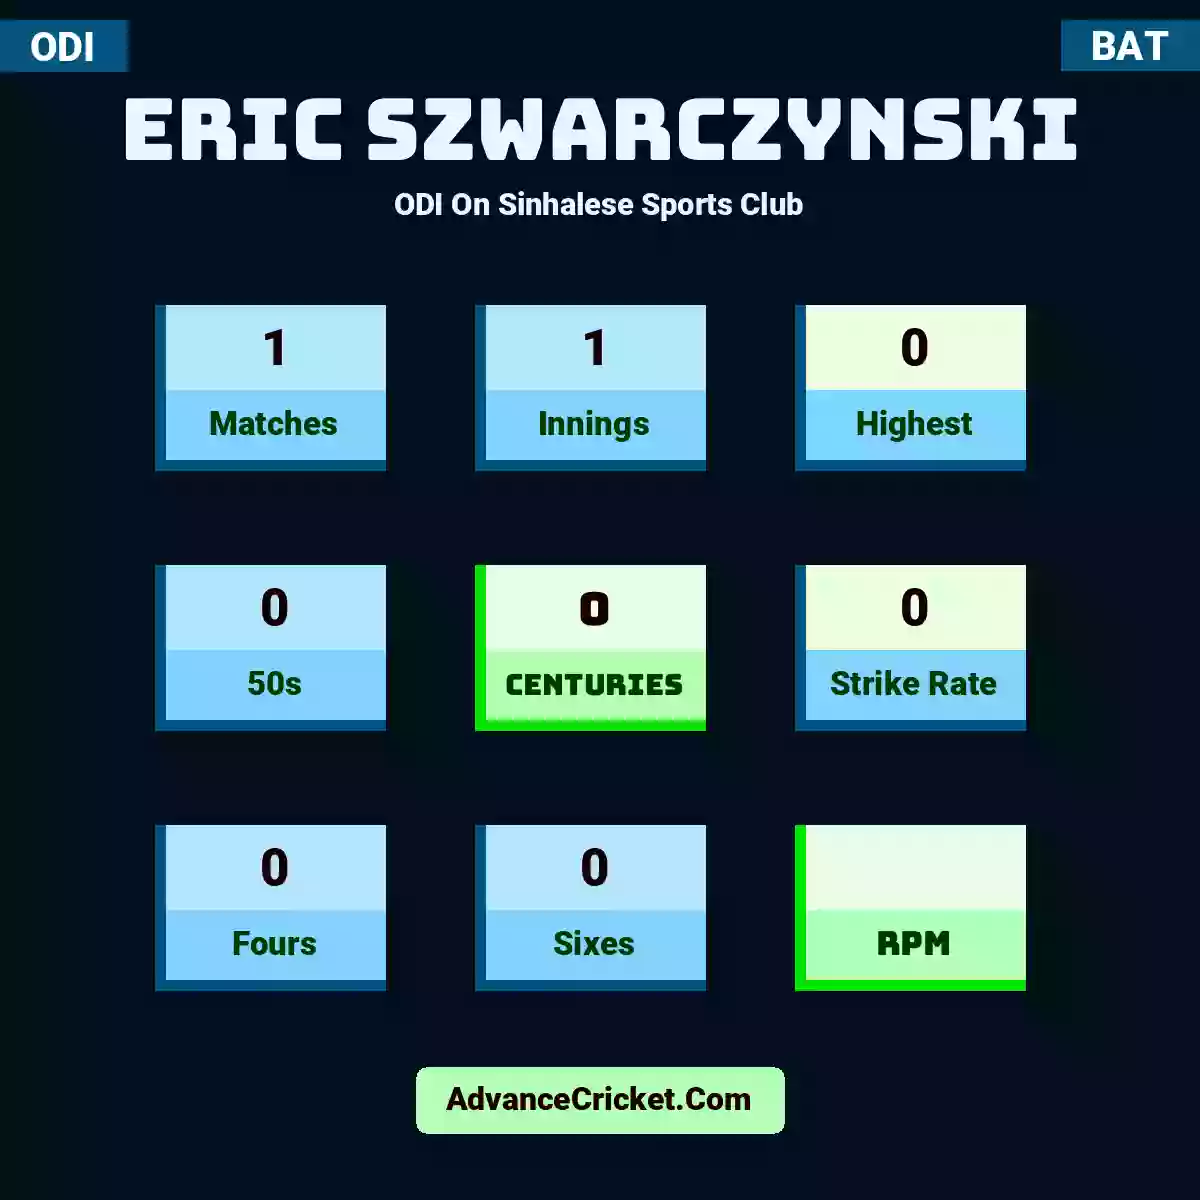 Eric Szwarczynski ODI  On Sinhalese Sports Club, Eric Szwarczynski played 1 matches, scored 0 runs as highest, 0 half-centuries, and 0 centuries, with a strike rate of 0. E.Szwarczynski hit 0 fours and 0 sixes.